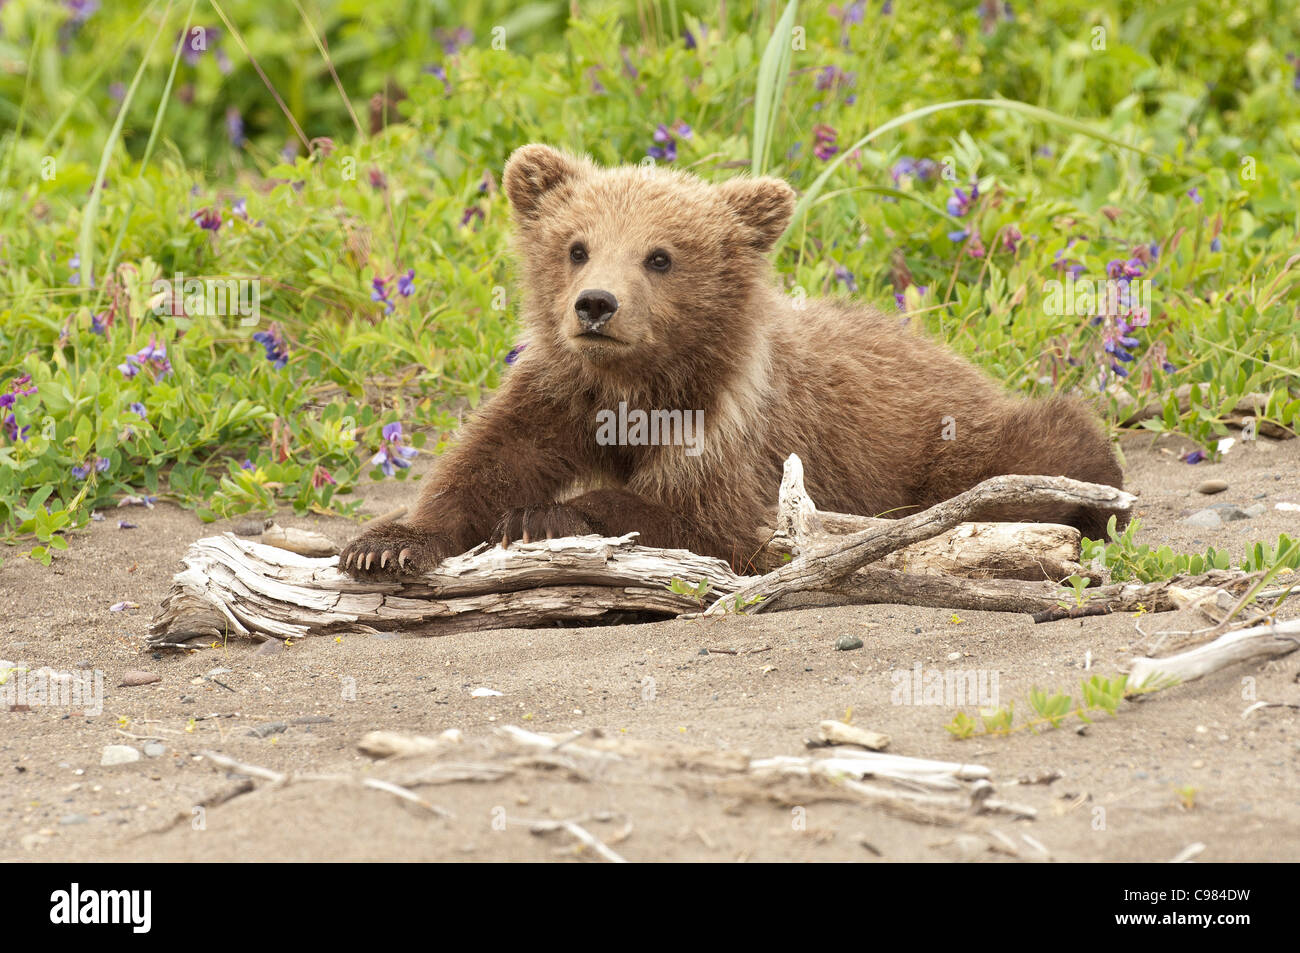 Stock photo of an Alaskan coastal brown bear cub laying on a piece of driftwood. Stock Photo